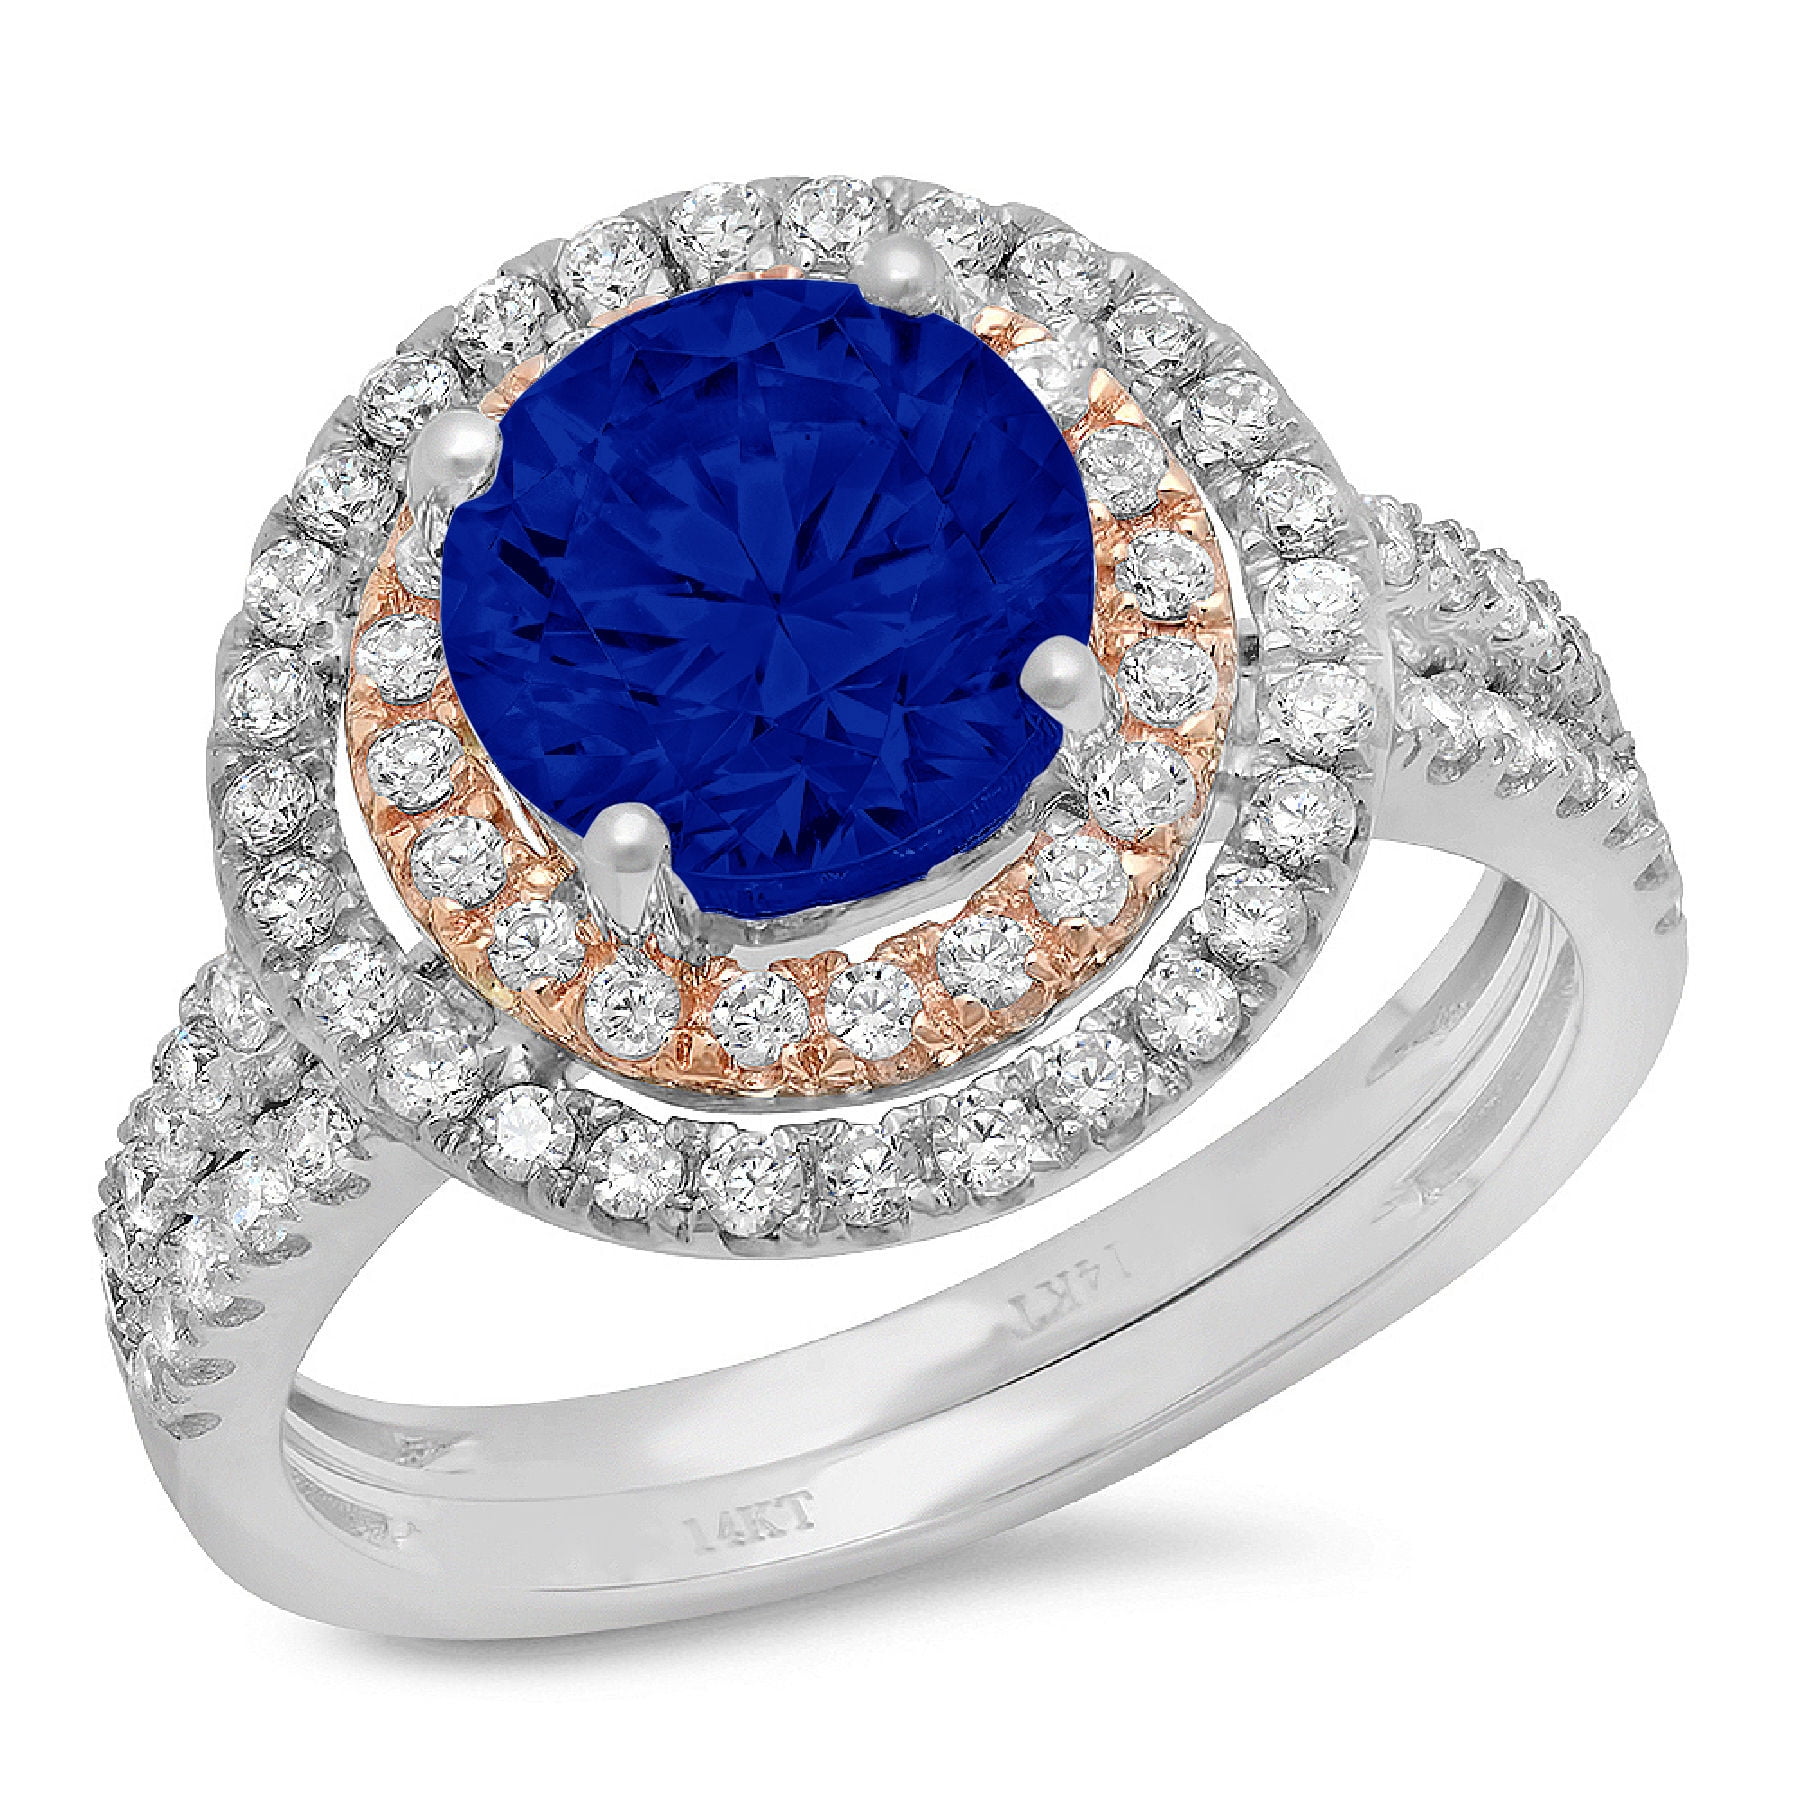 2.68ct Loose Emerald Cut Lab Created Blue Sapphire Gemstone 9 x 7mm 